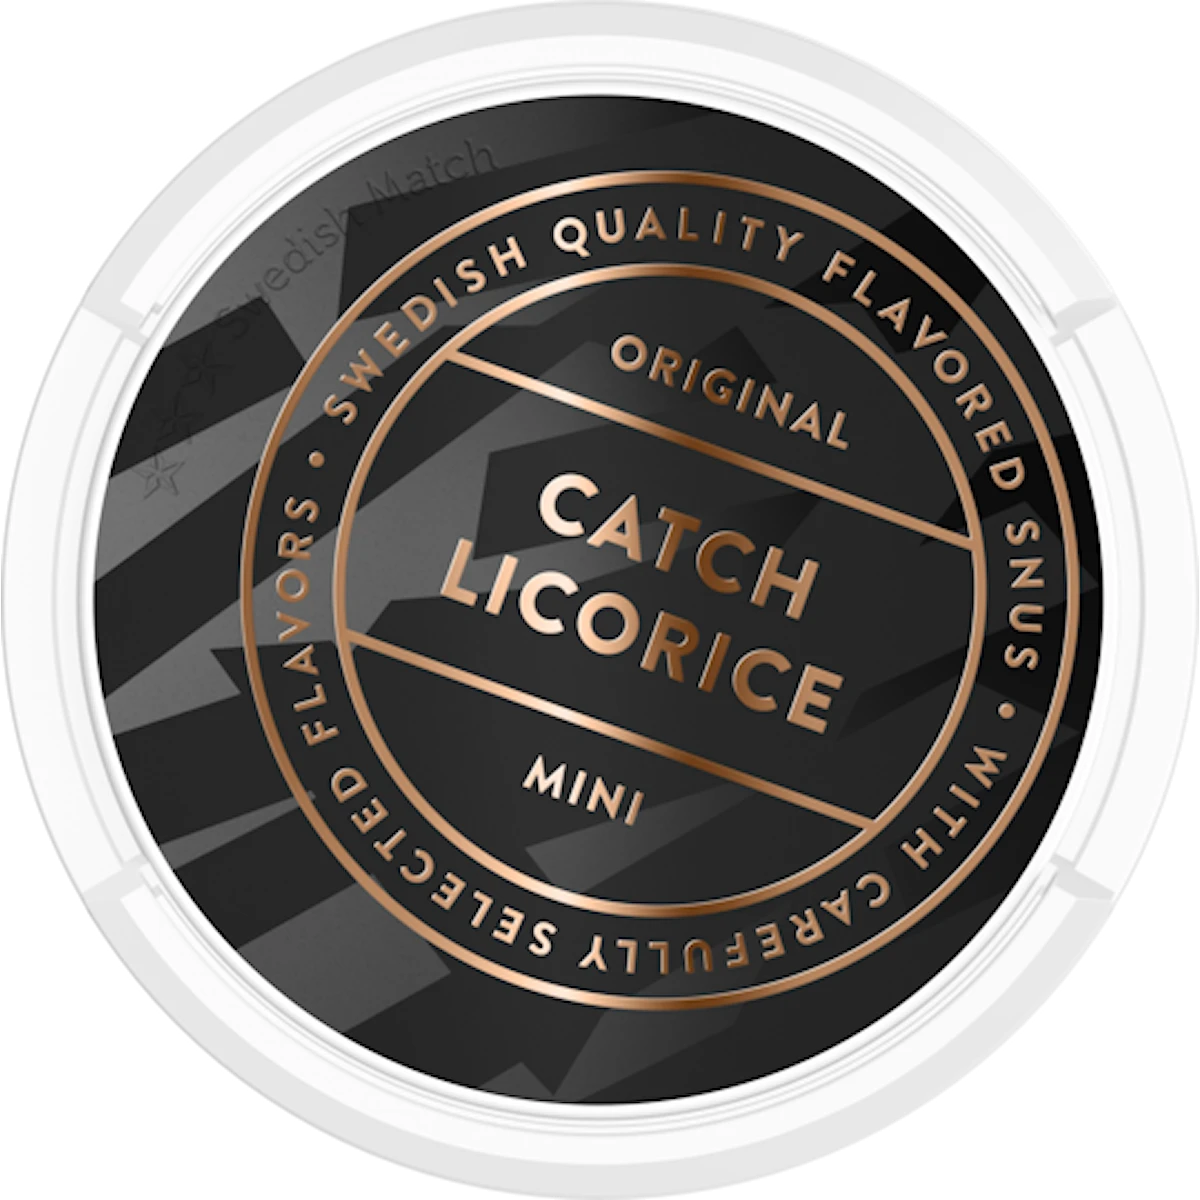 Catch Licorice Mini